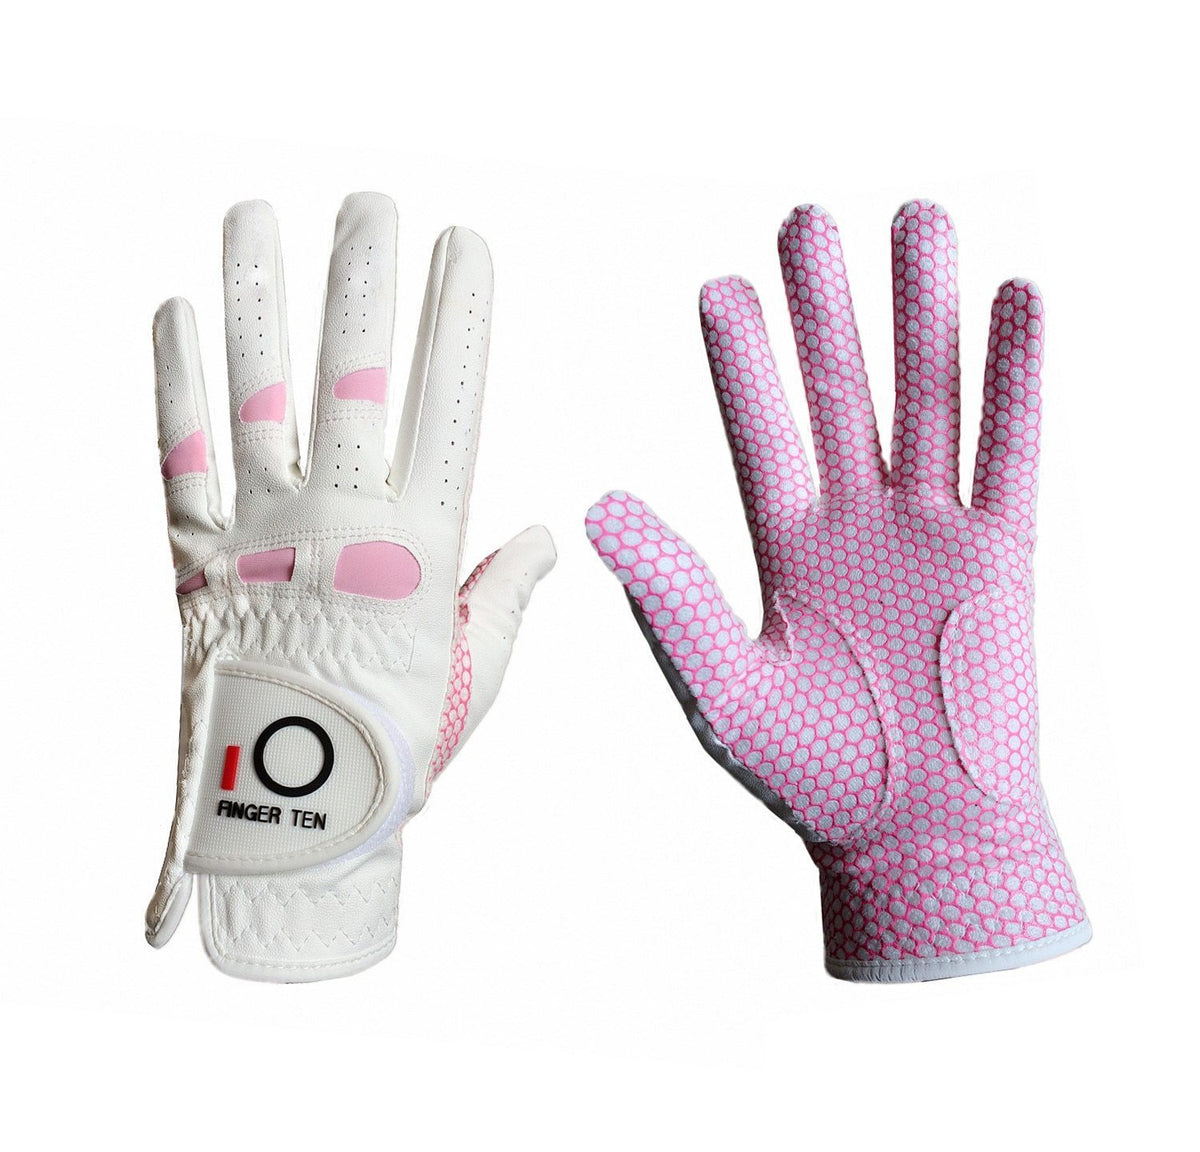 Golf Gloves Women - Women's Golf Gloves Ladies Right-handed Lh Rh Golfer Rain Grip Fit Size Small Medium Large XL All Weather Golf Gloves Finger Ten